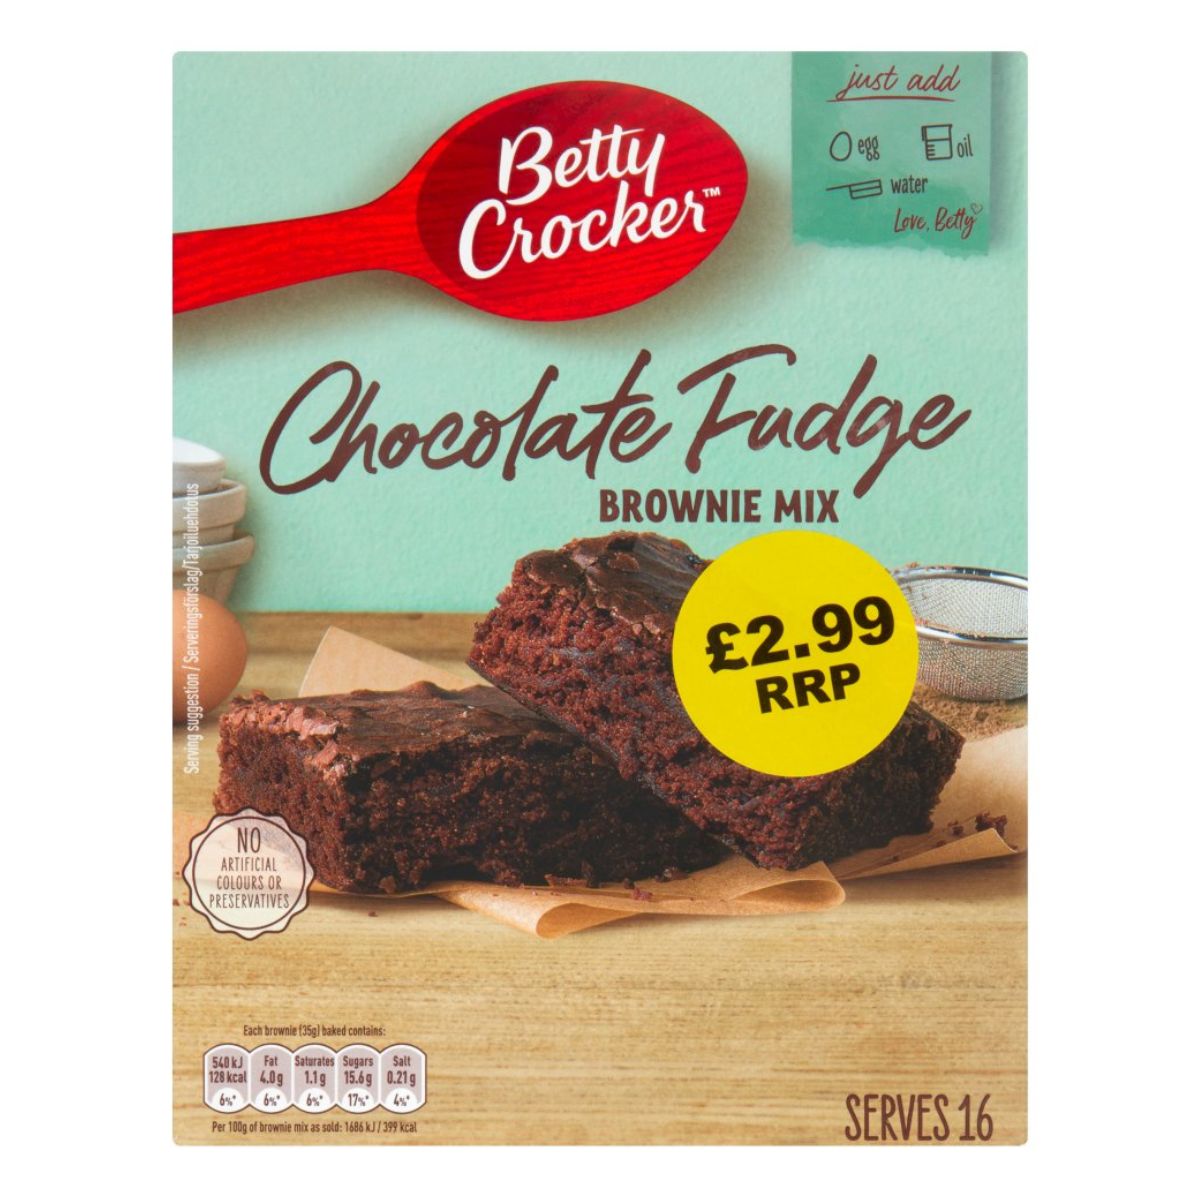 Betty Crocker - Chocolate Fudge Brownie Mix - 415g.